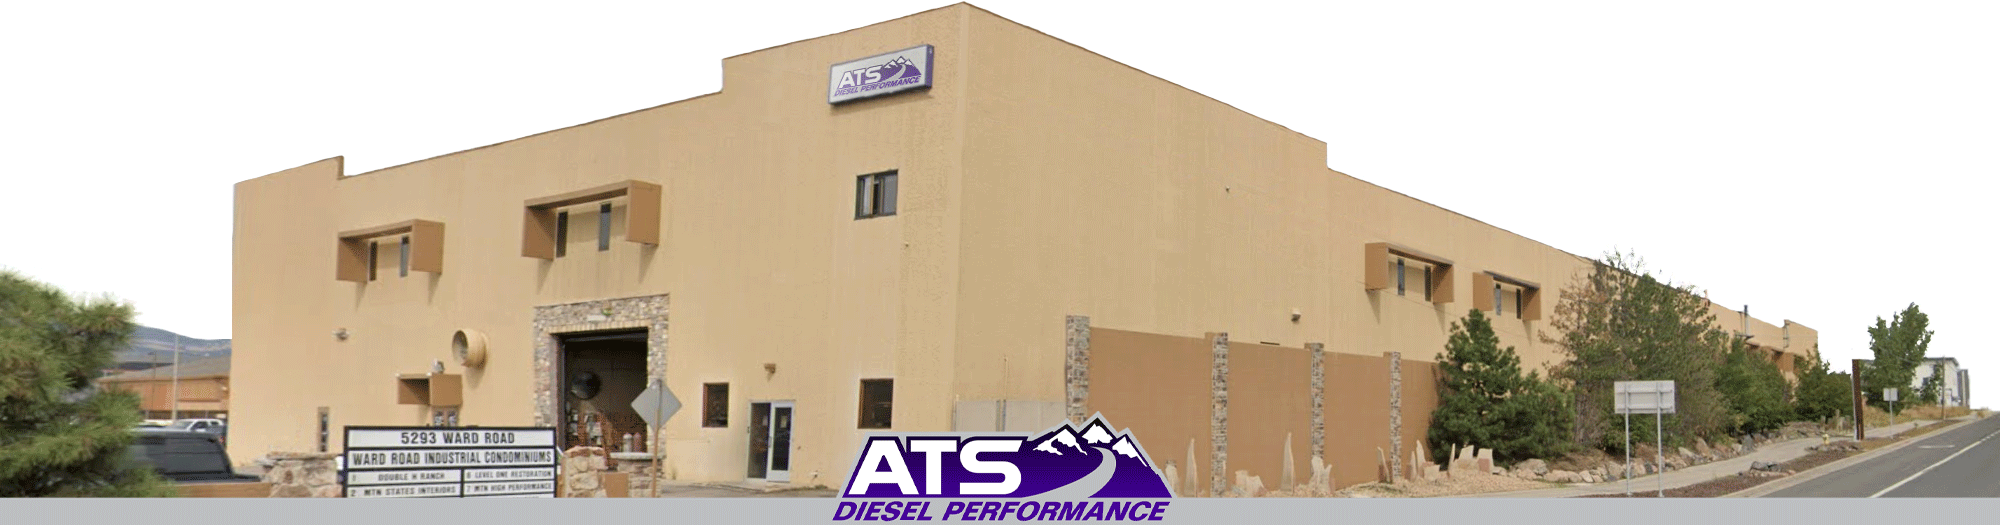 ATS Diesel Performance headquarters